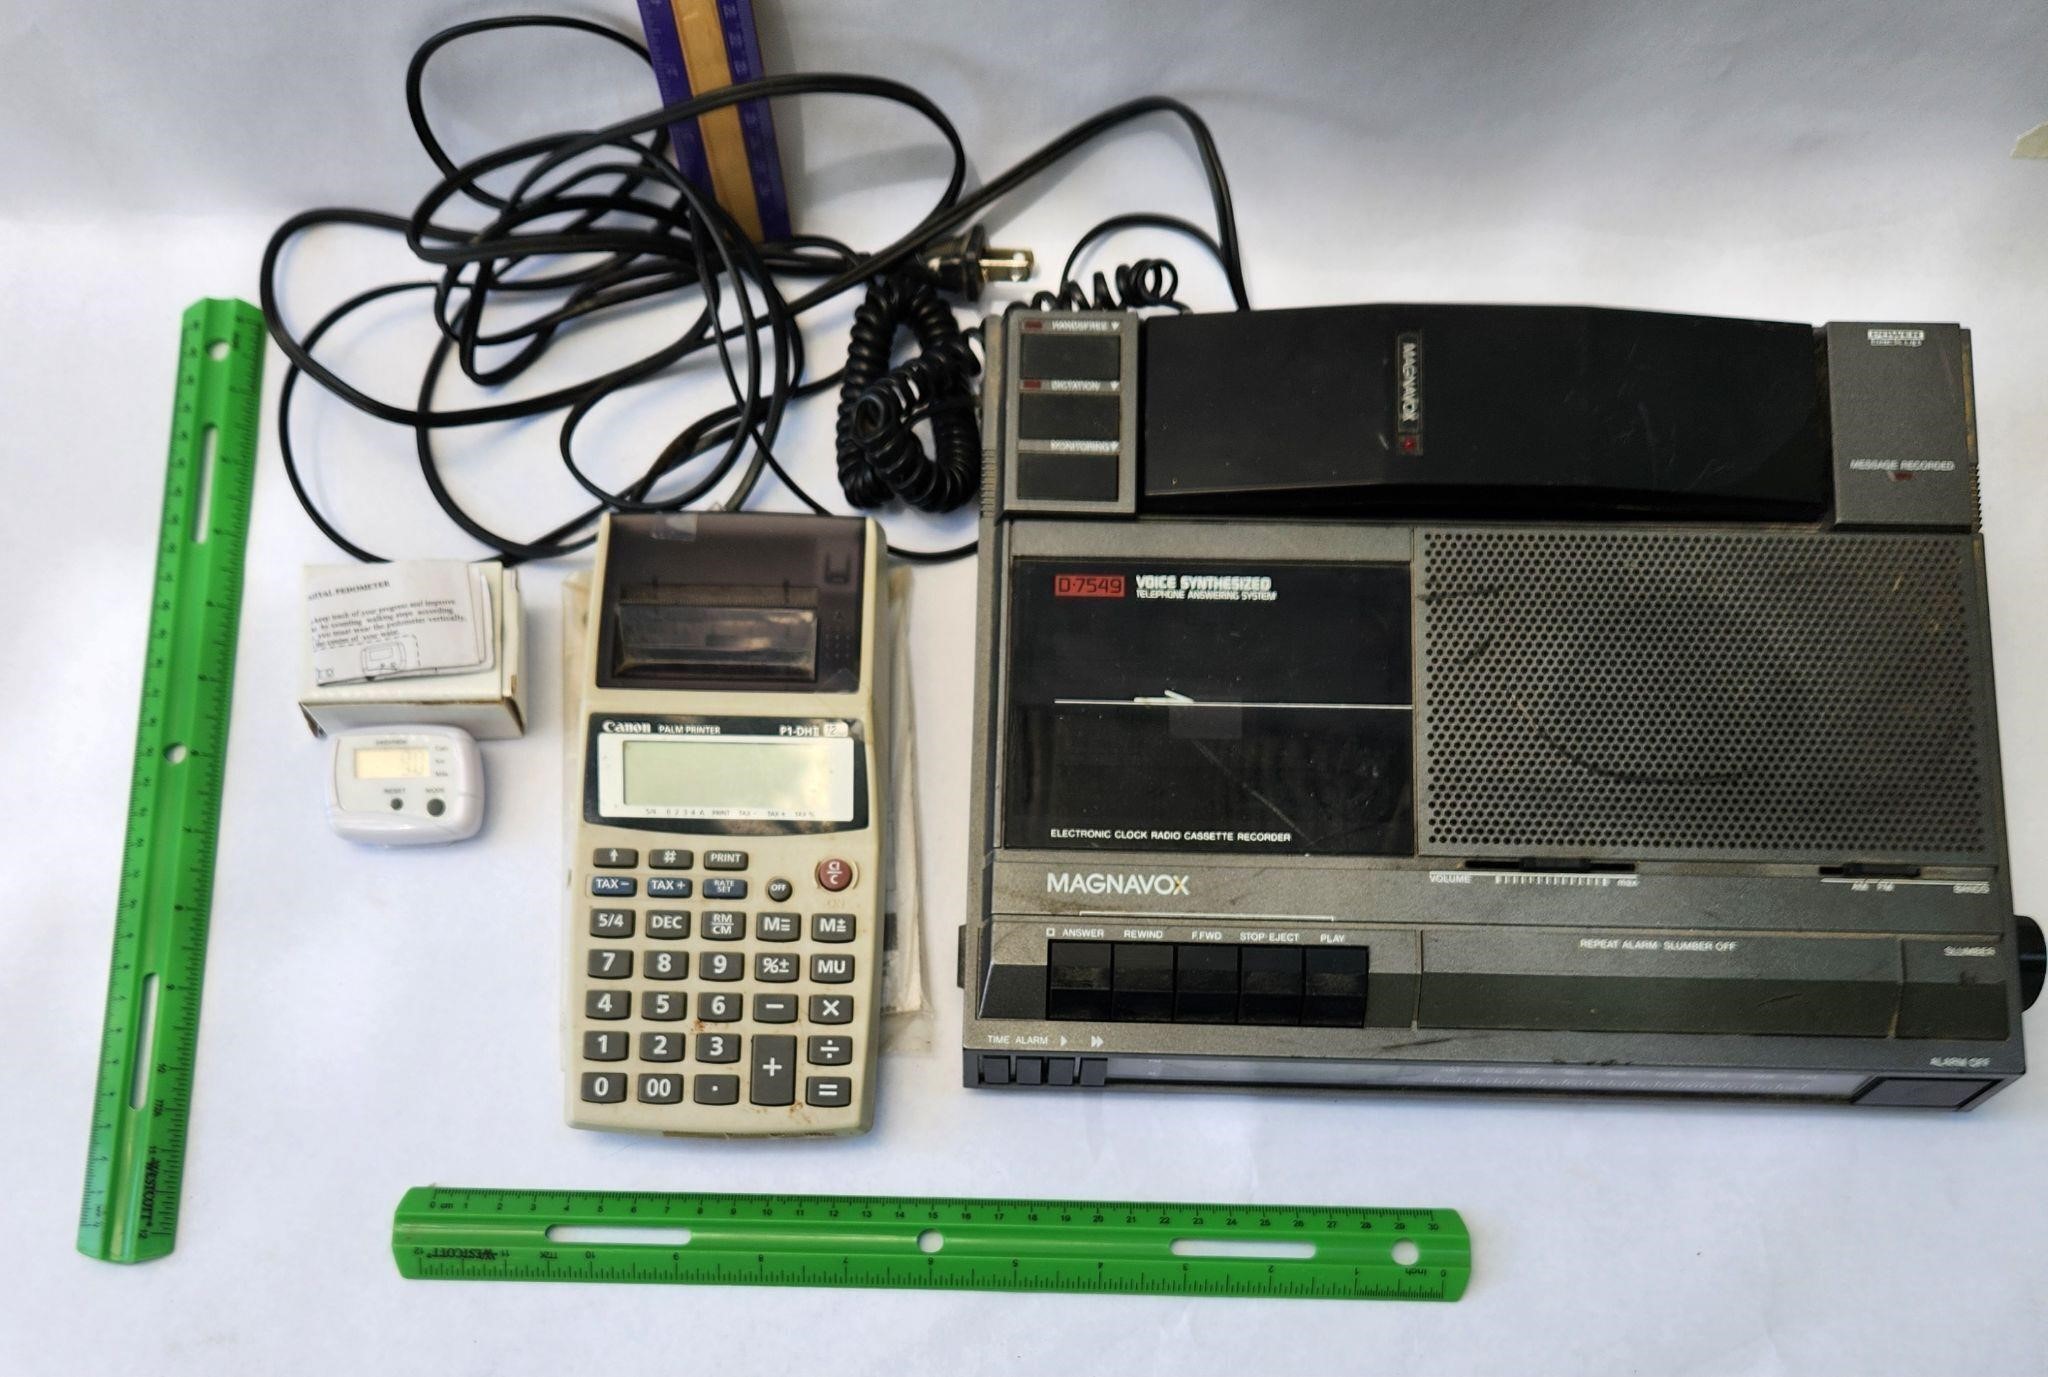 Magnavox telephone system, palm printer, pedometer